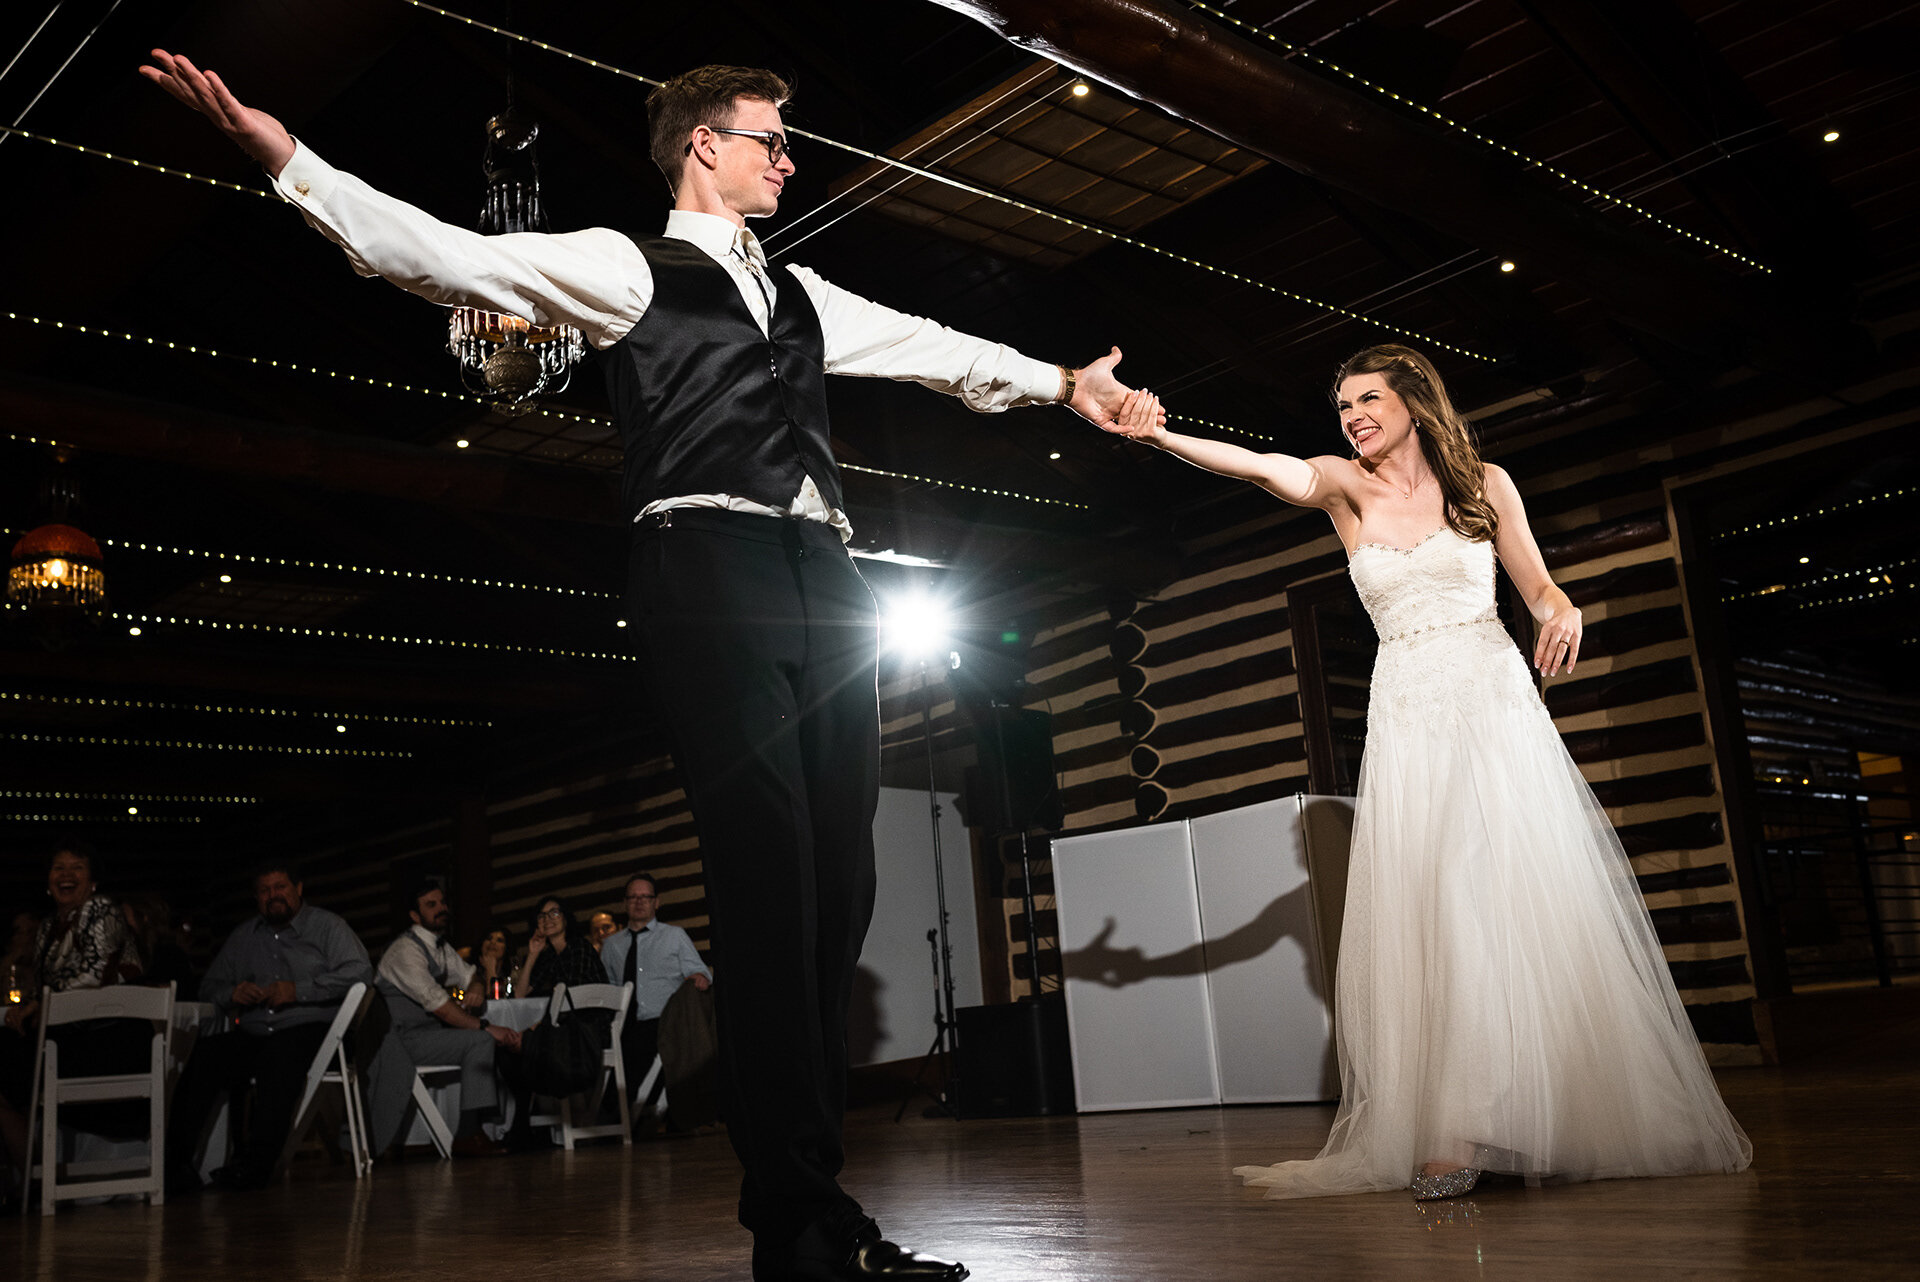 wedding-photography-timeline-denver-colorado-reception-first-dance-toast (2).jpg